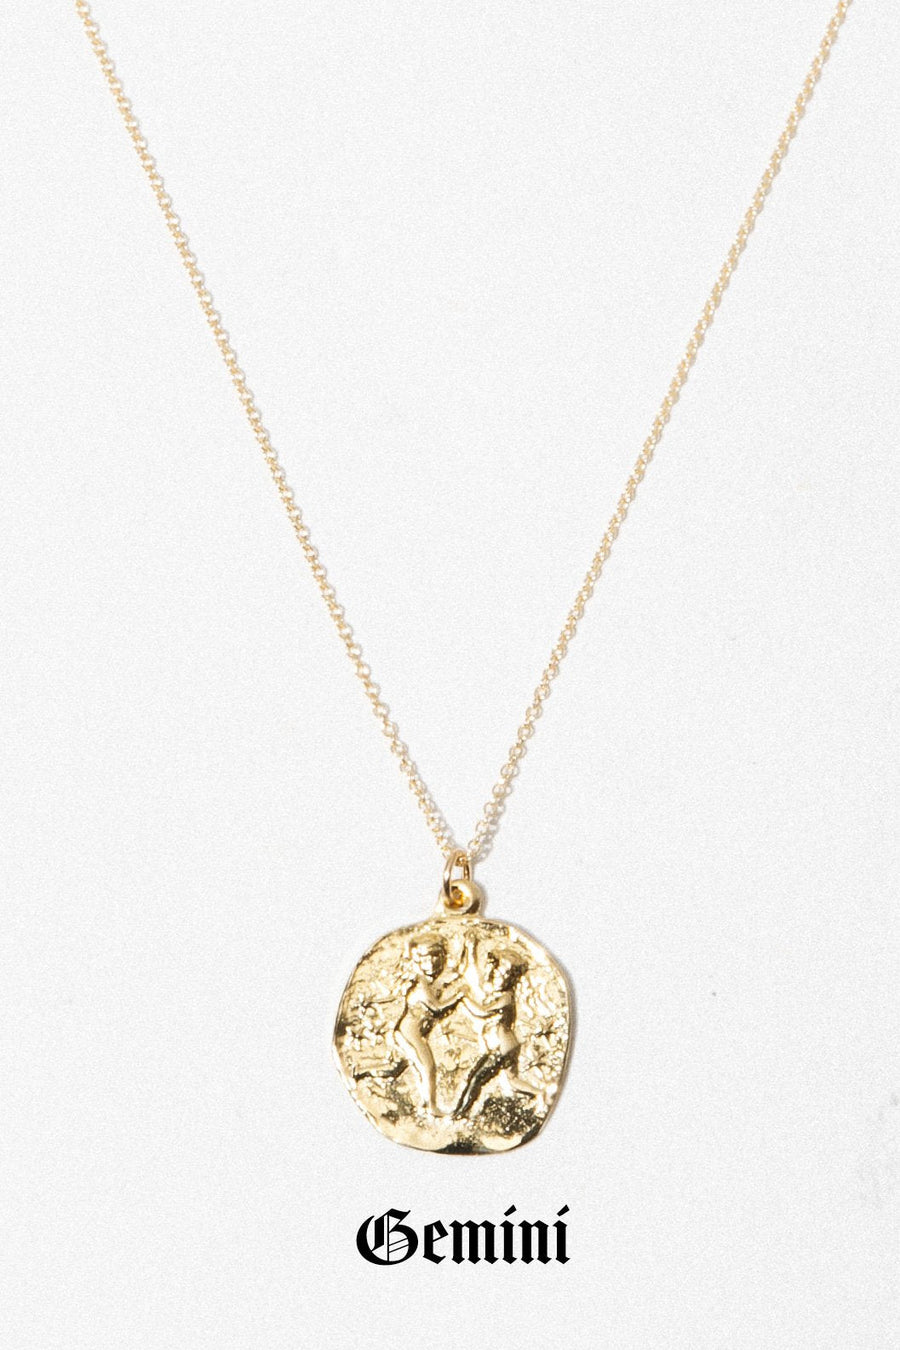 Studio Grun Jewelry Gemini / Gold / 20 inches Zodiac Necklace